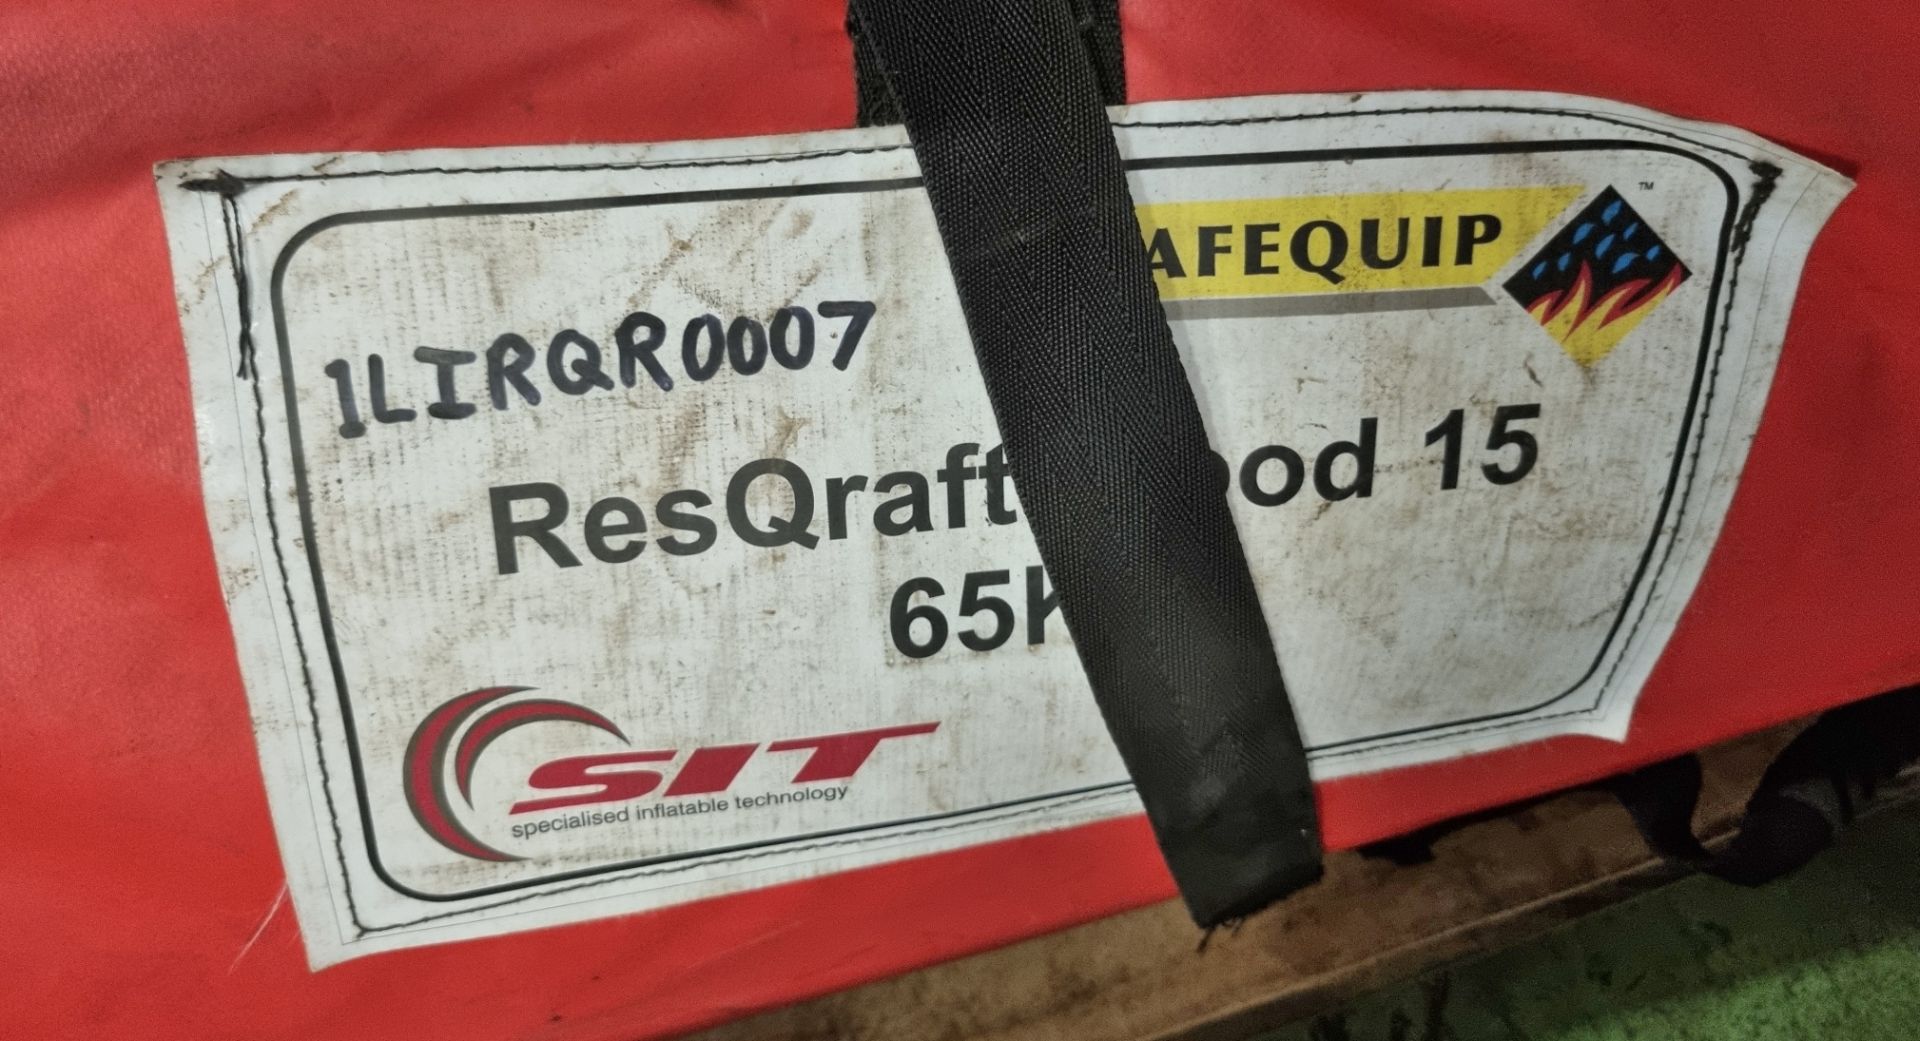 SIT ResQraft Flood 15 Inflatable Raft - Image 3 of 3